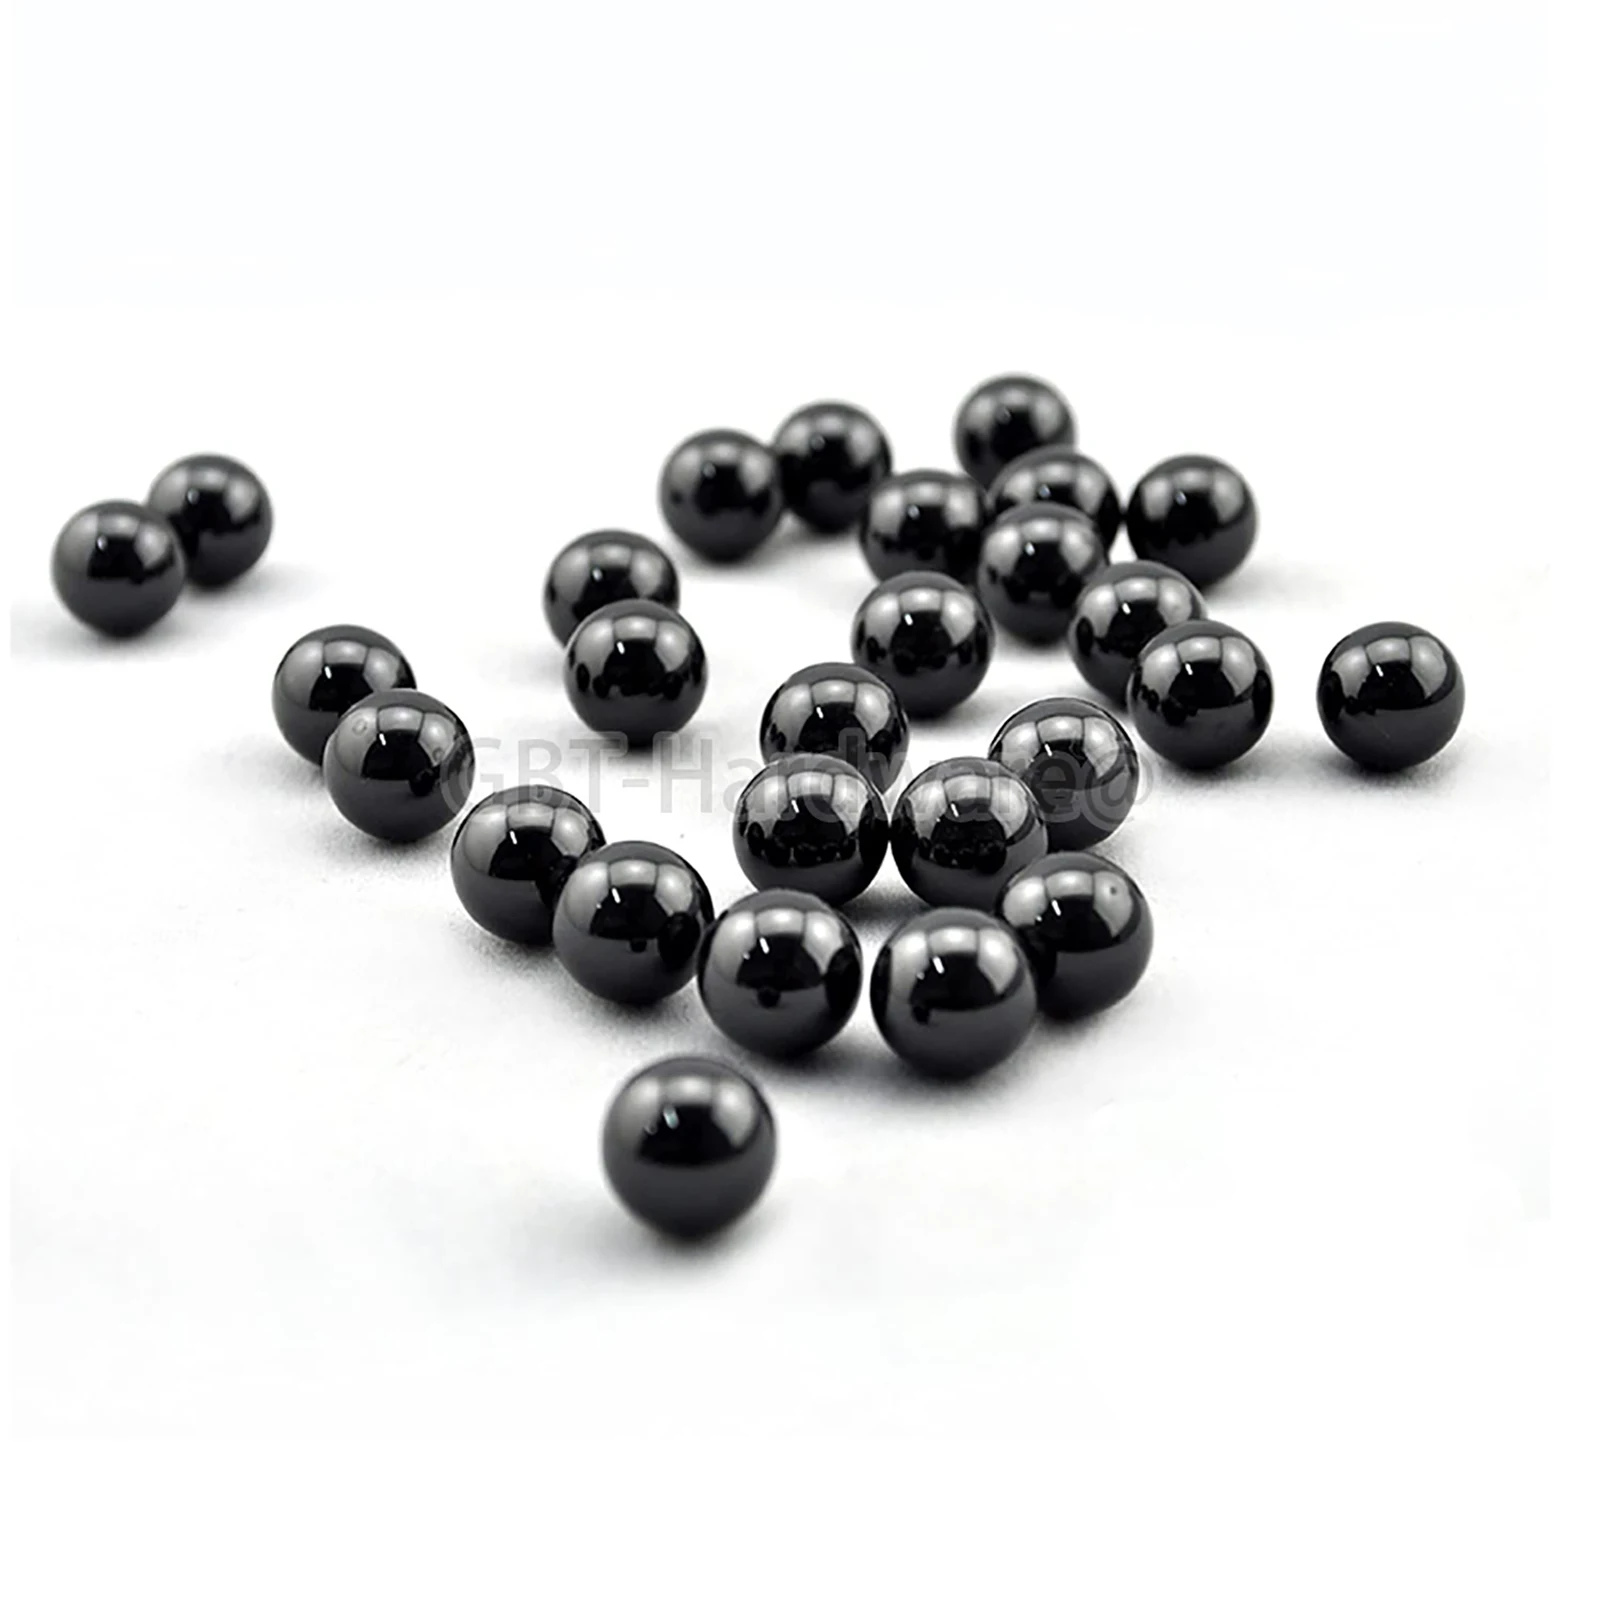 Si3N4 Silicon Nitride Ball G5 Precision 5pcs 1/4" Ceramic Bearing Balls 